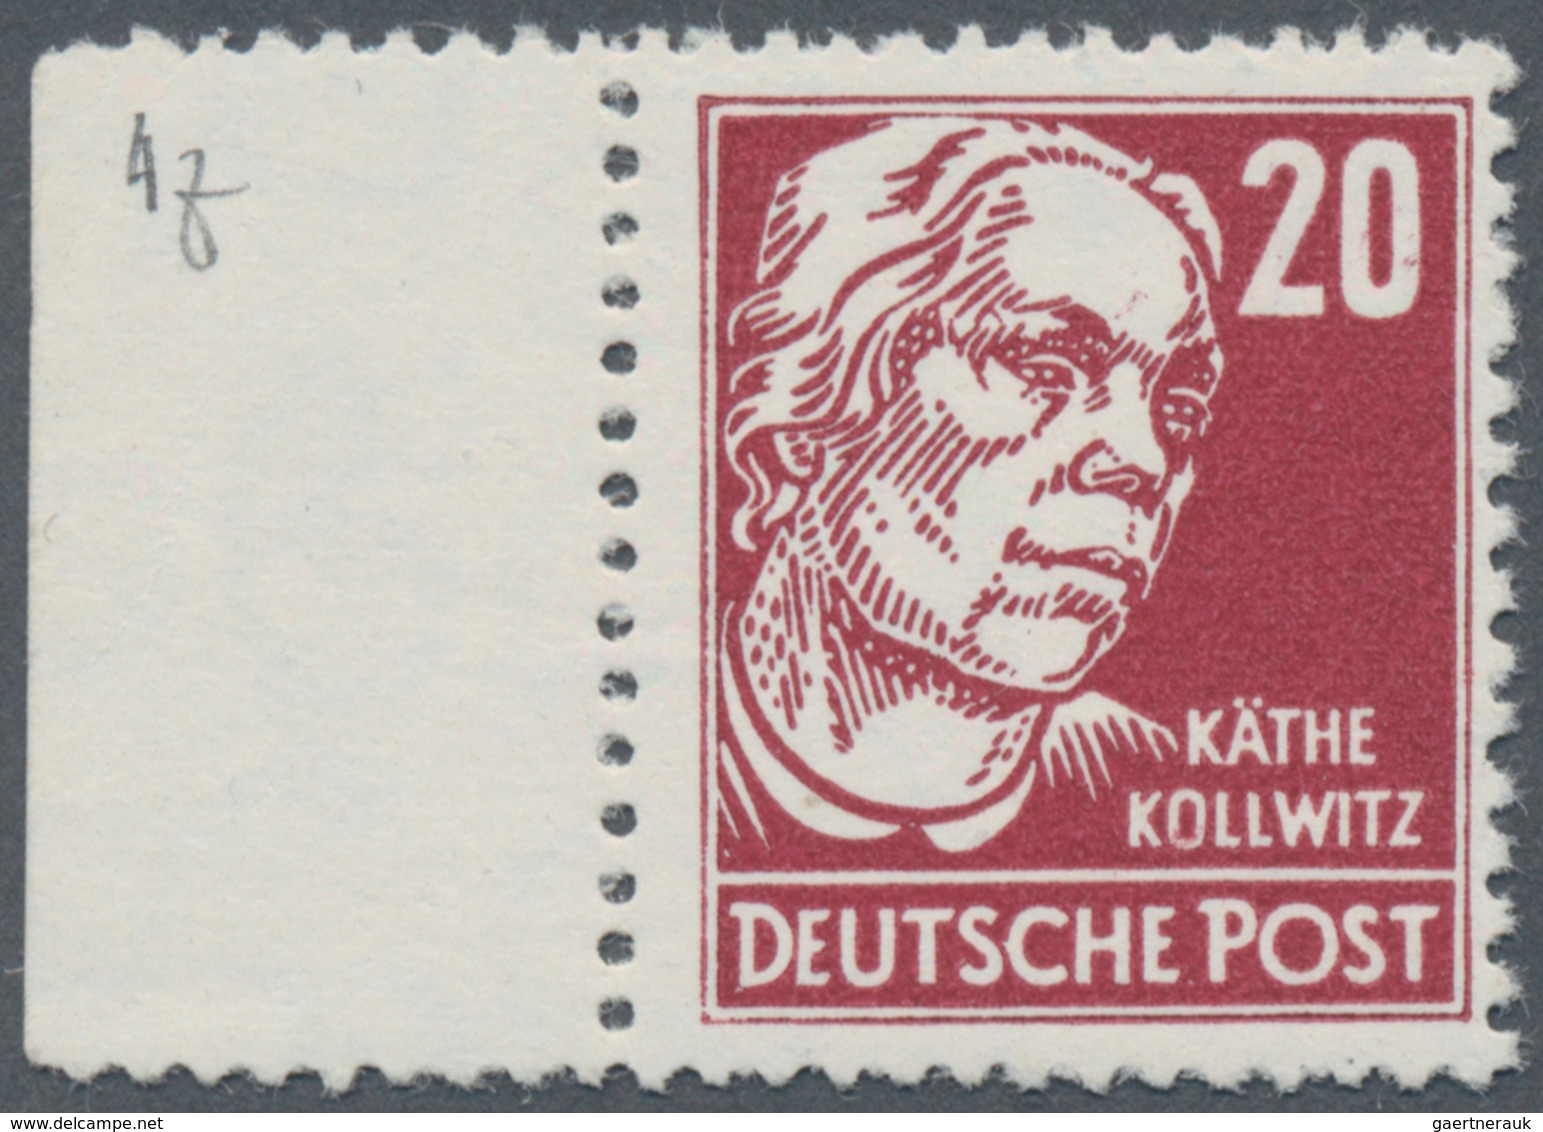 DDR: 1953, 20 Pfg. Köpfe II, Käthe Kollwitz Lebhatkarminrot Auf Gestrichenem Papier Mit Senkrechtem - Covers & Documents